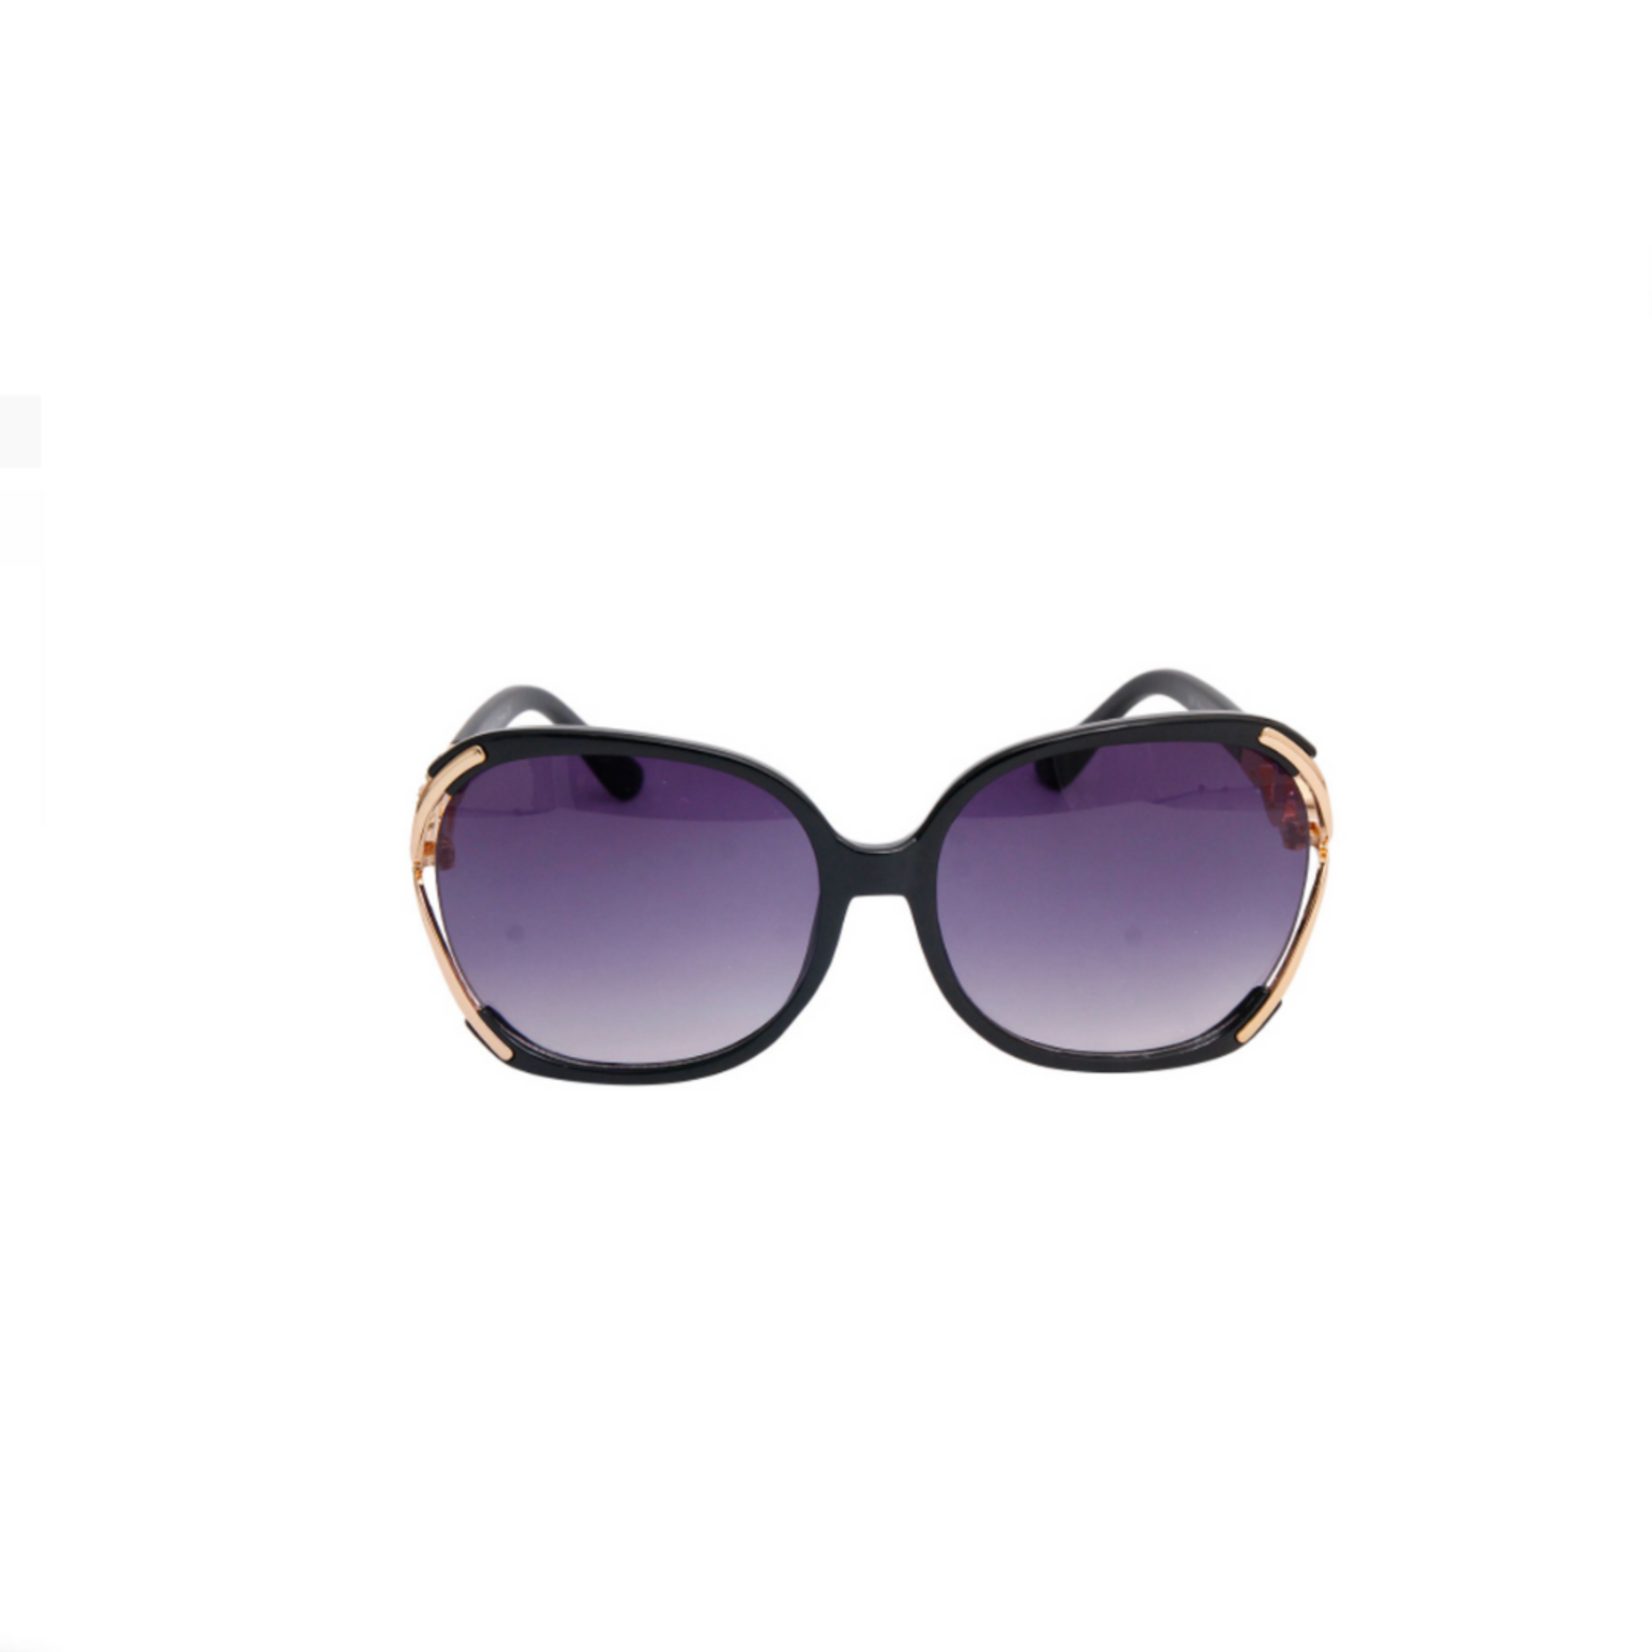 Designer Style Gold Edge Black Rounded Sunglasses